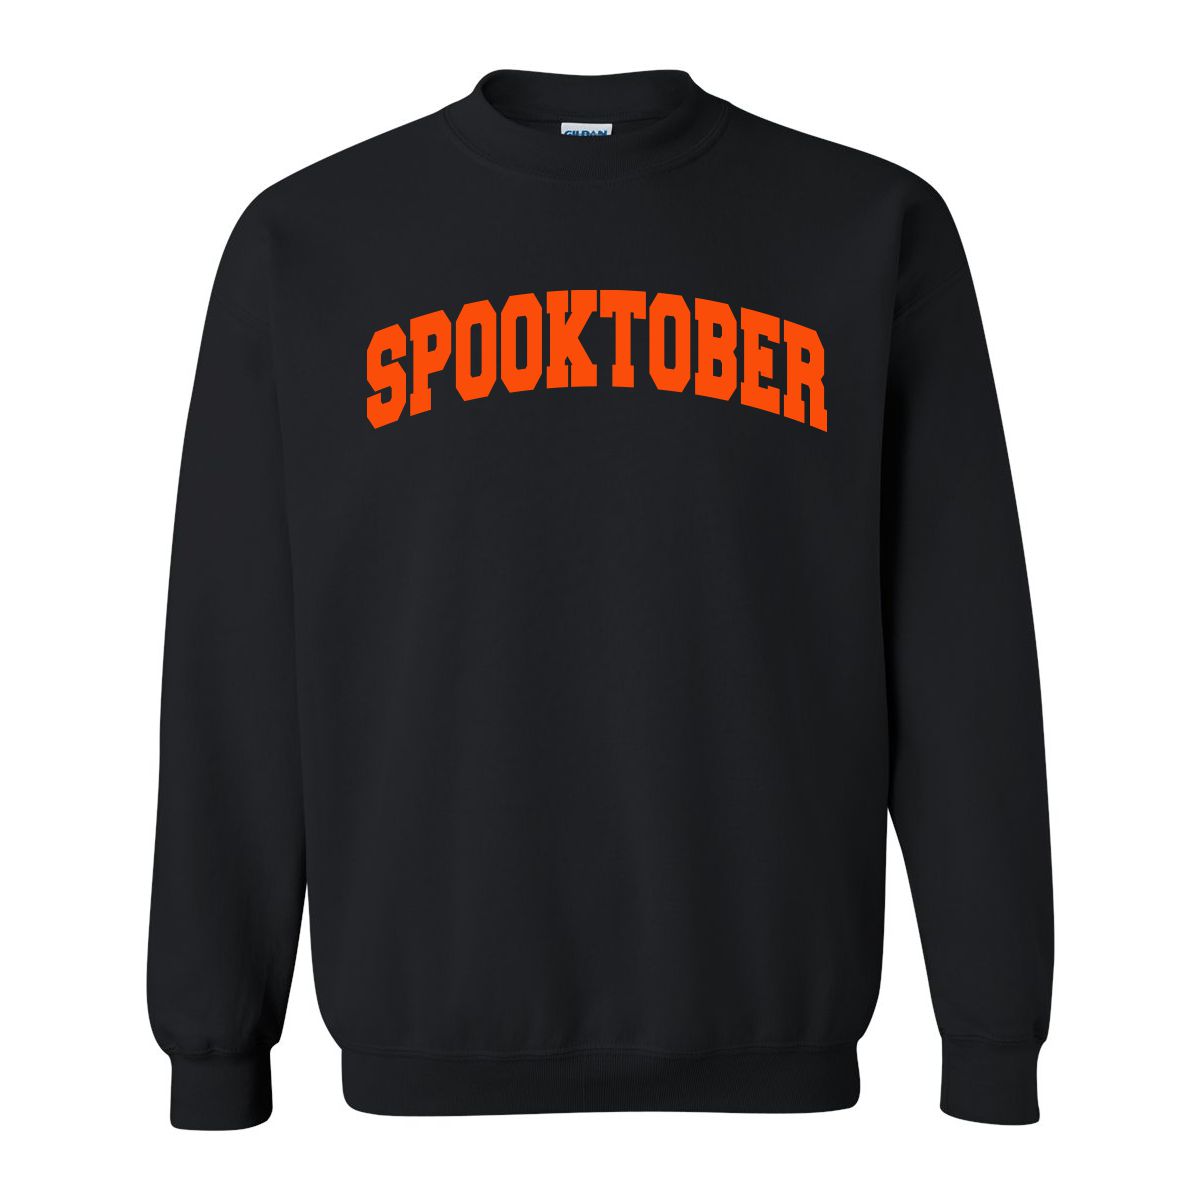 Spooktober II Crewneck-Crewnecks-Bussin With The Boys-Black-S-Barstool Sports